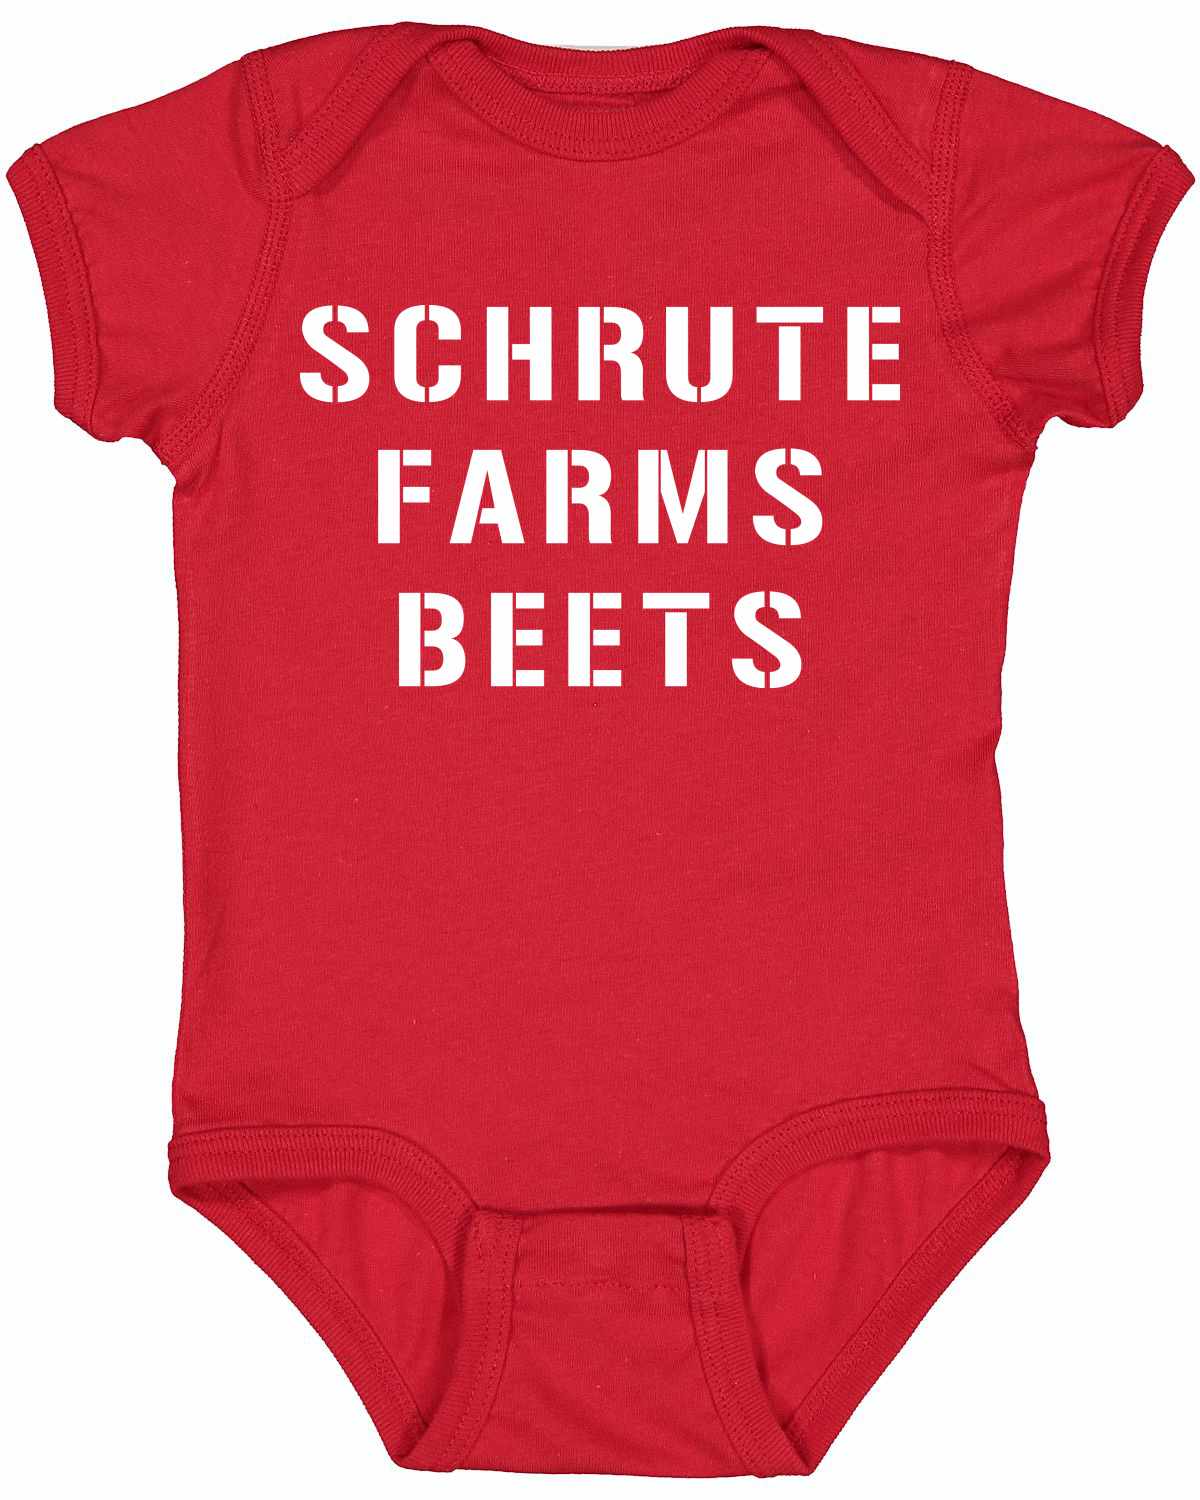 SCHRUTE FARMS BEETS on Infant BodySuit (#396-10)